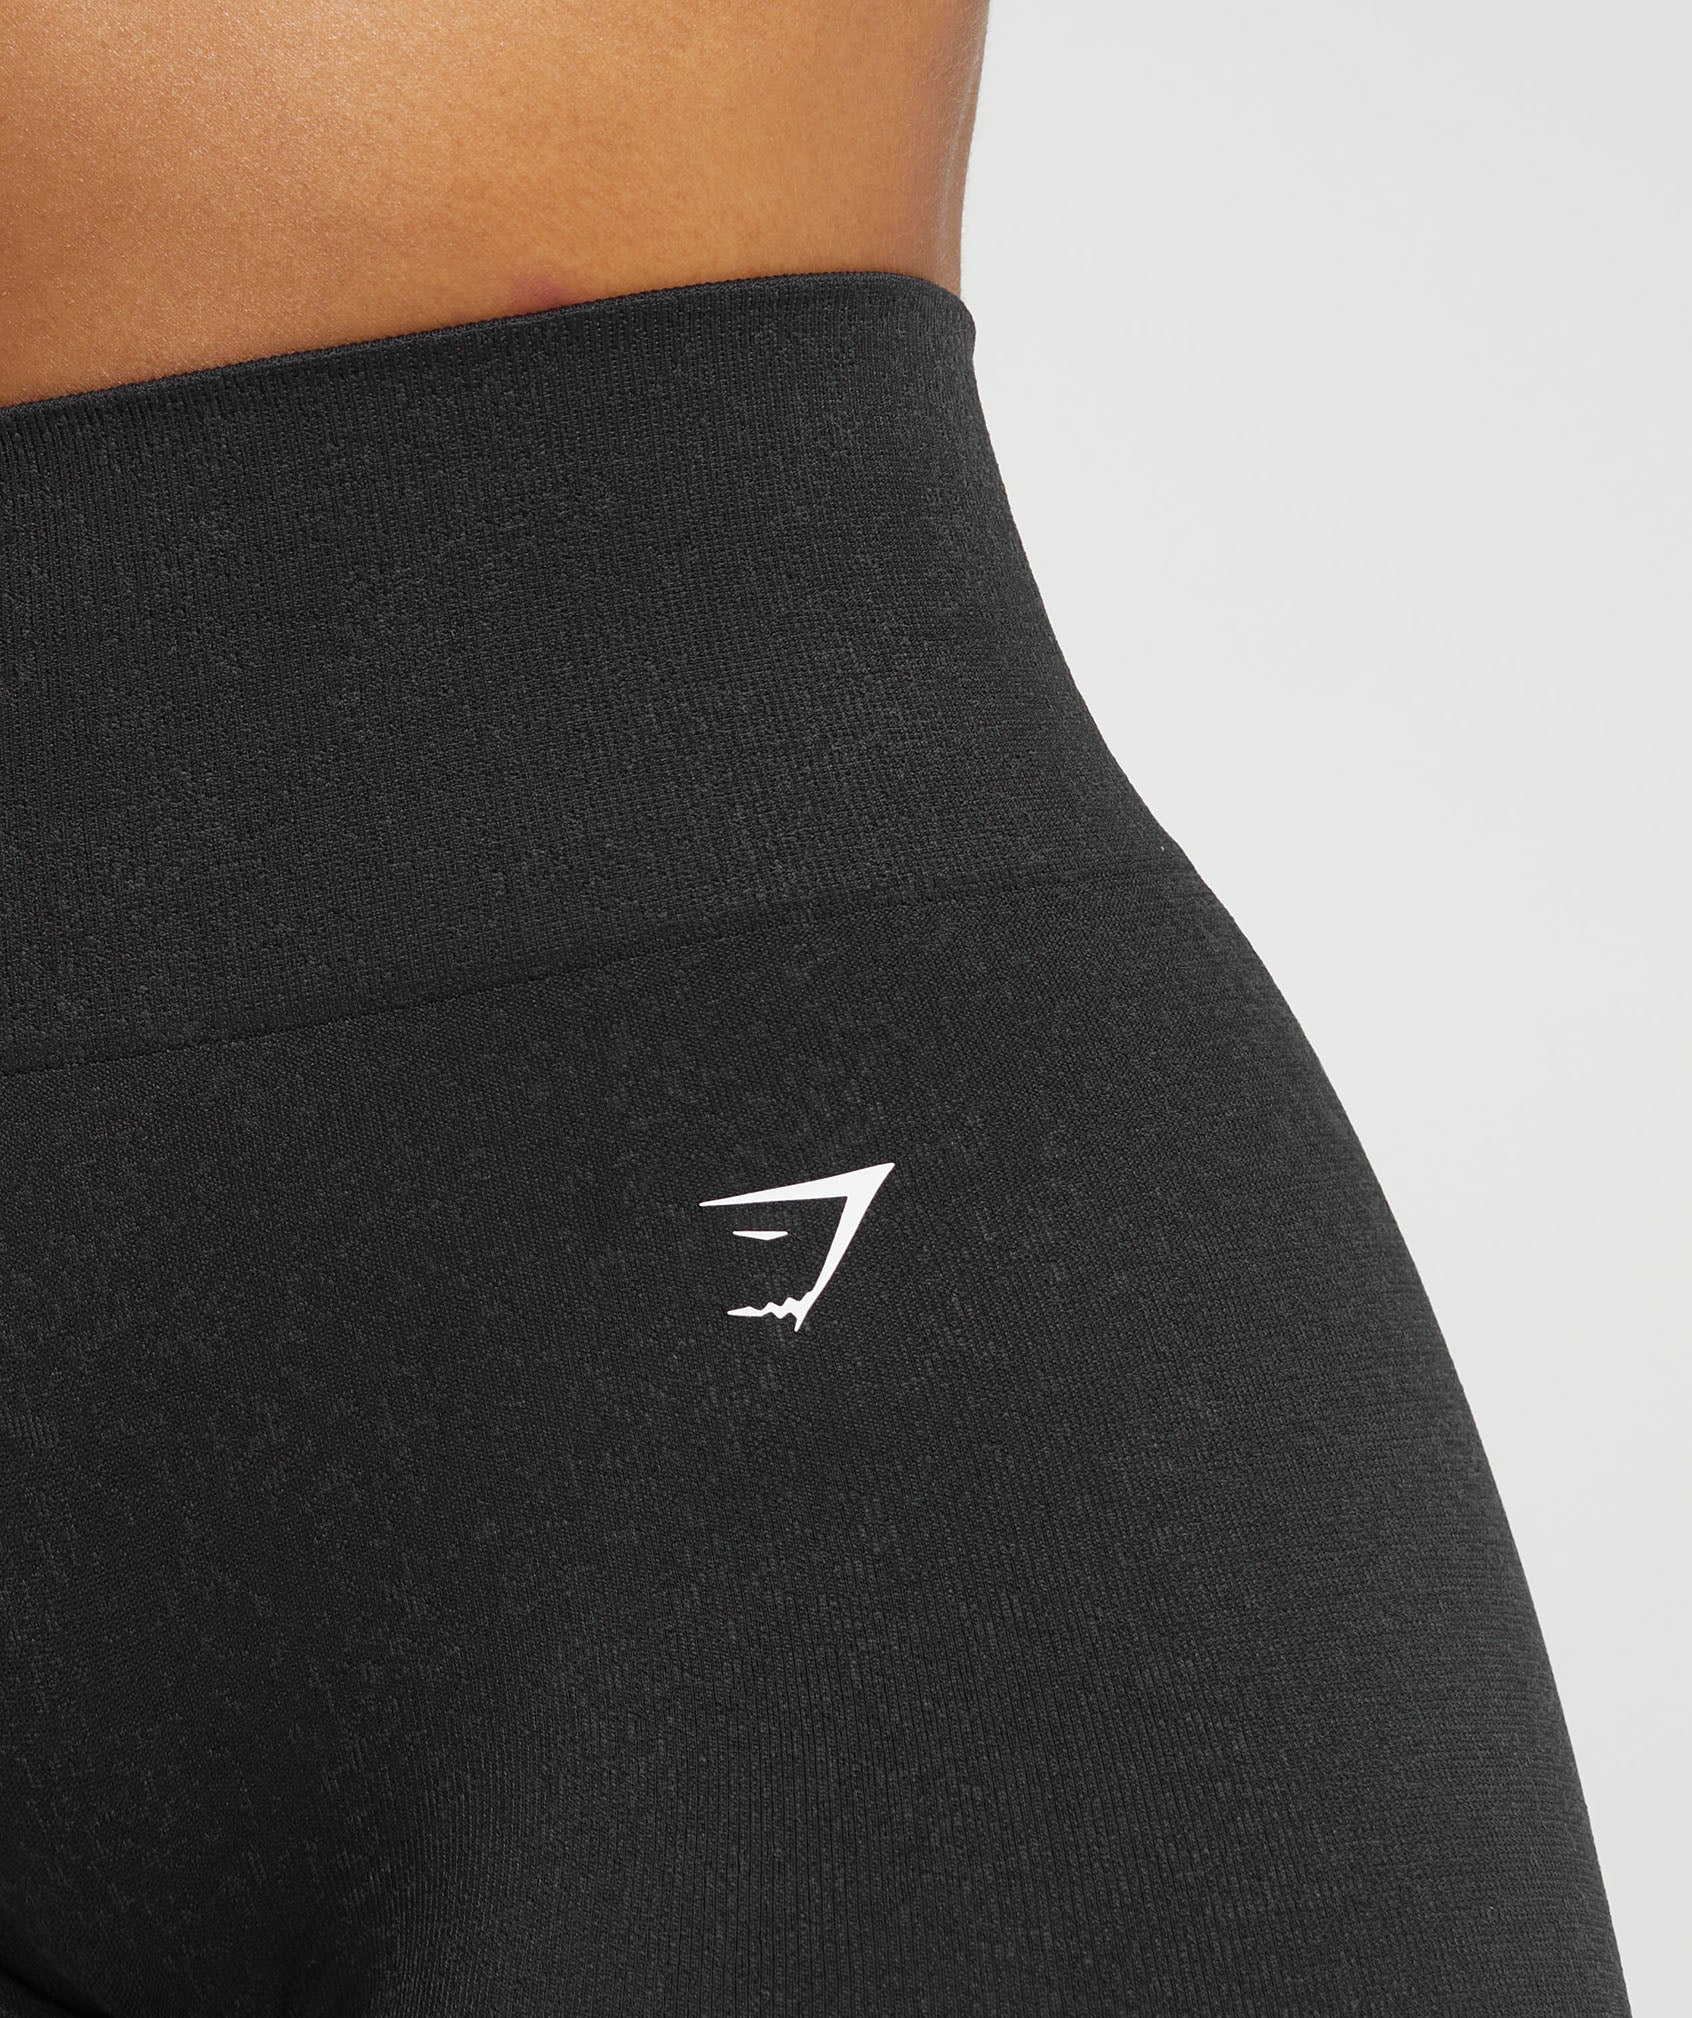 Adapt Fleck Seamless Shorts in Black/Smokey Grey - view 5